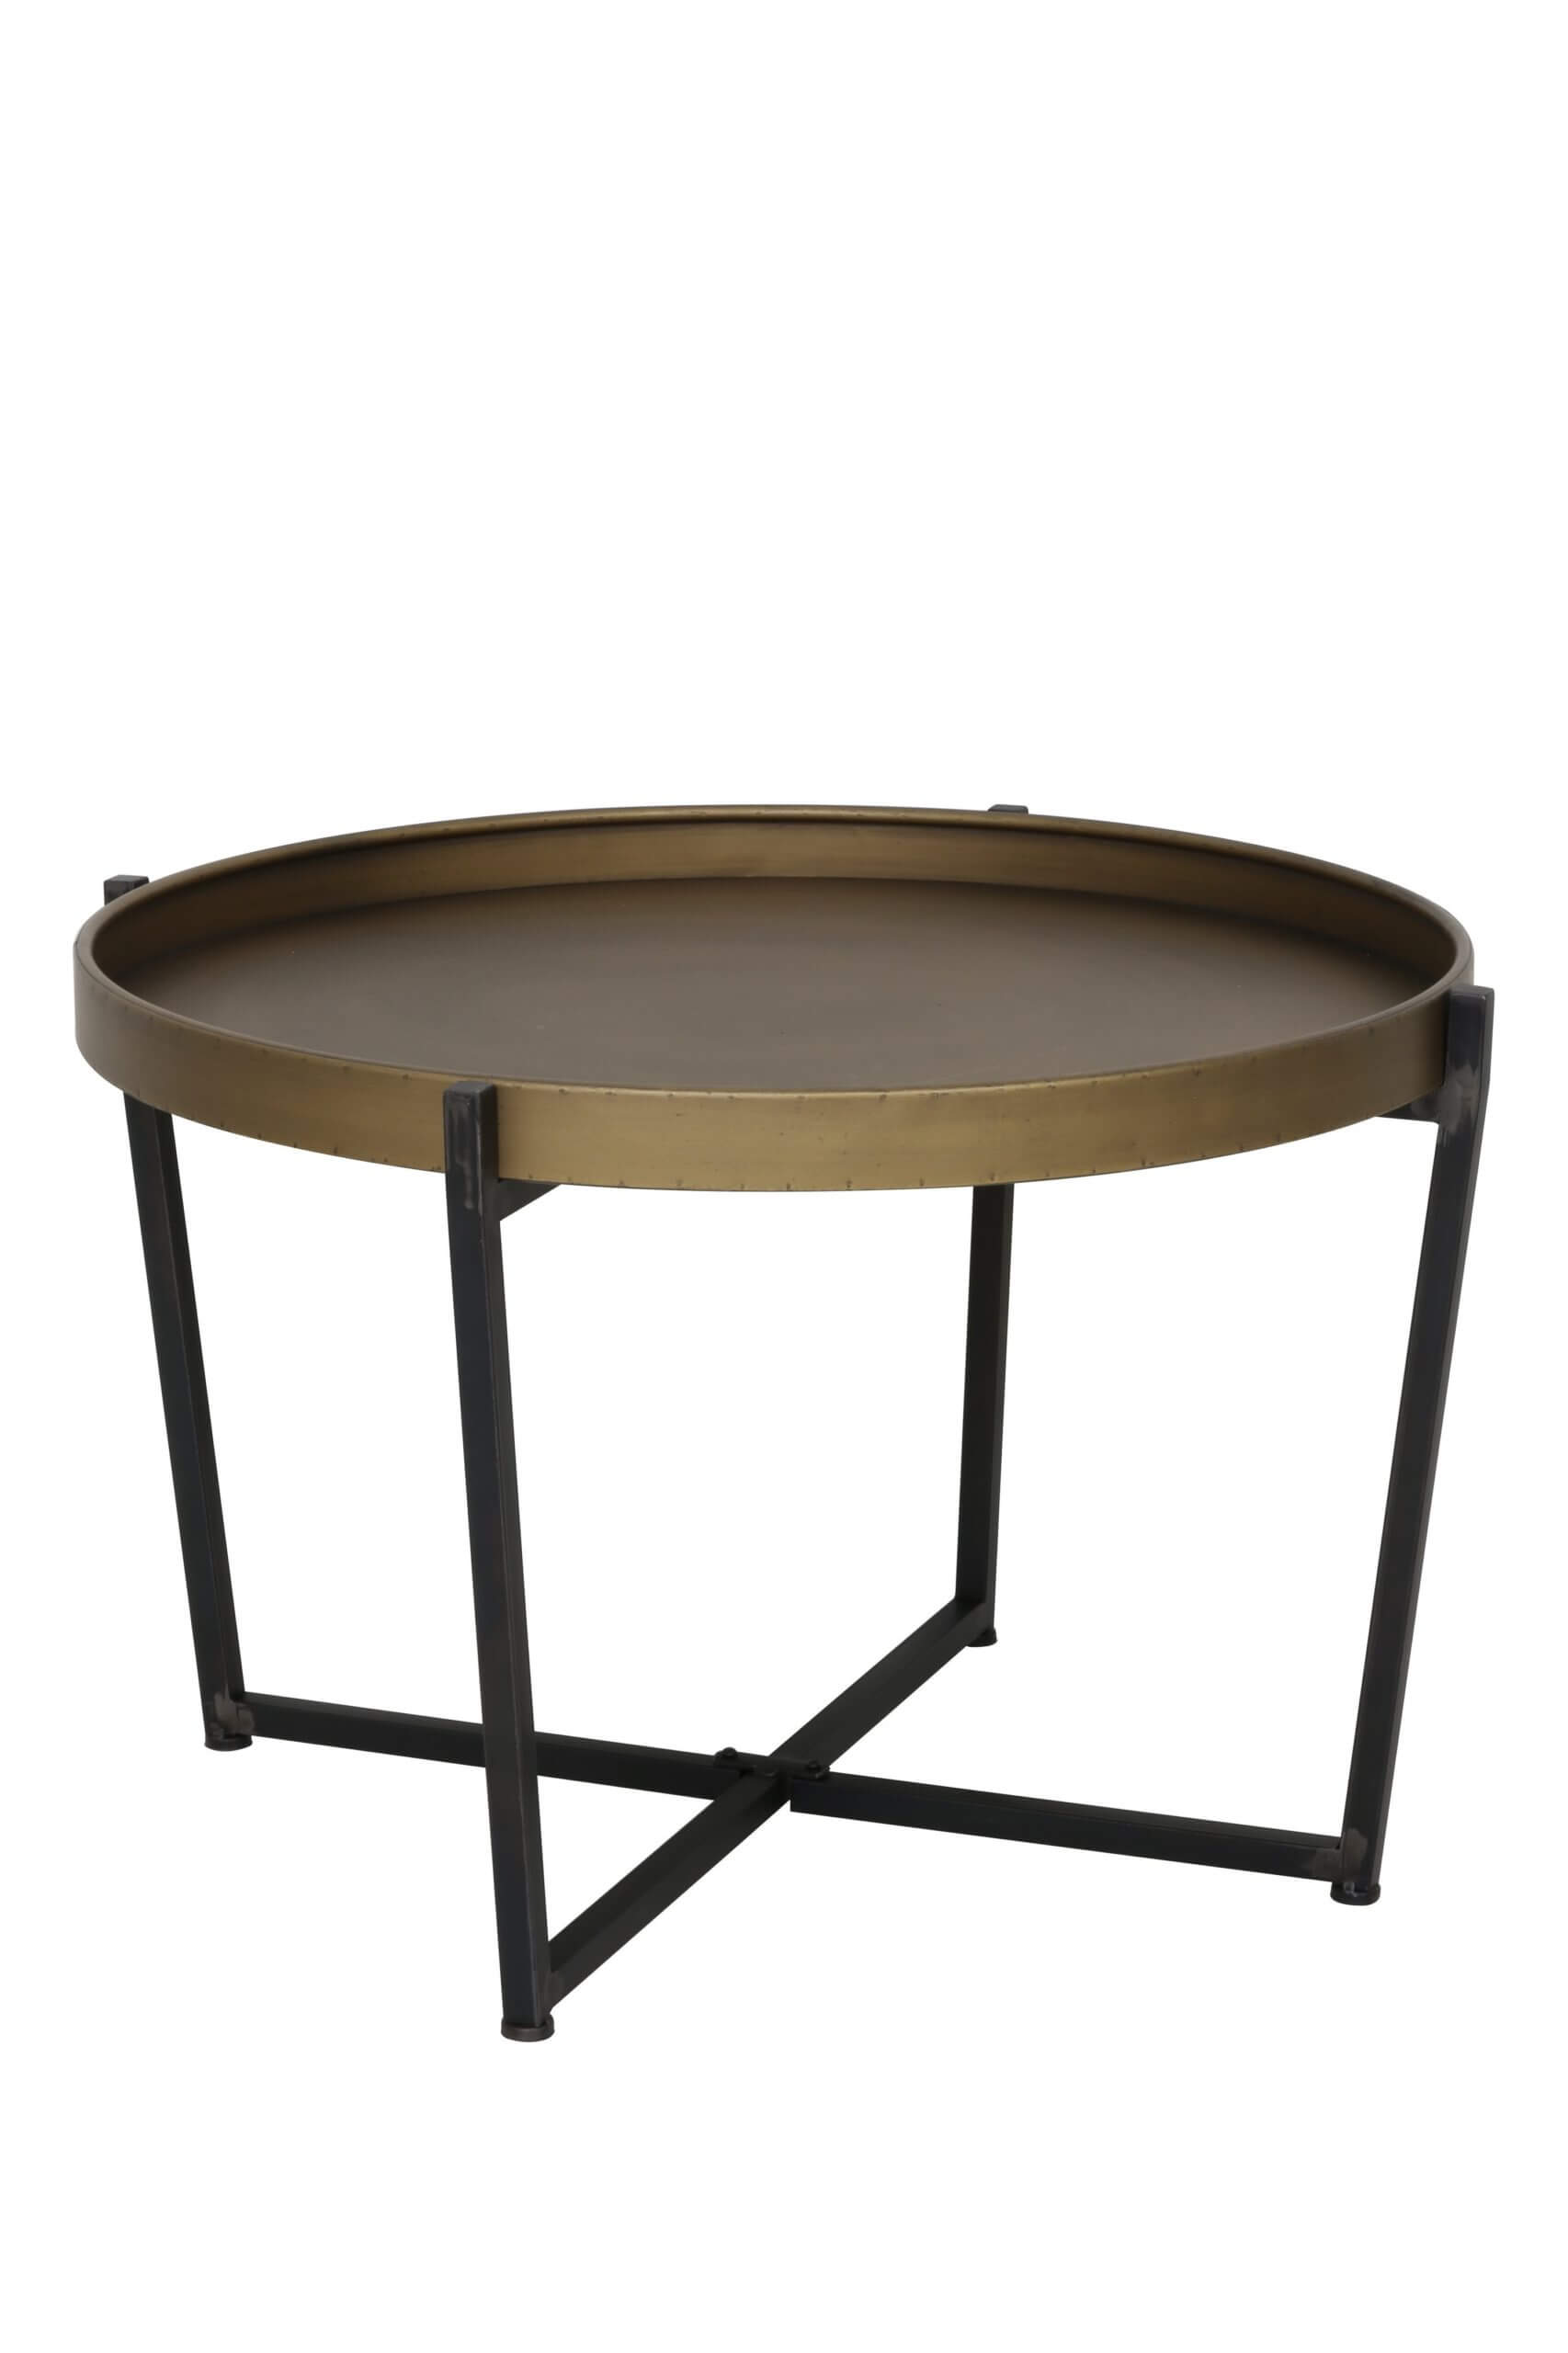 Light & Living Bronze Round Coffee Table With Raised Rim